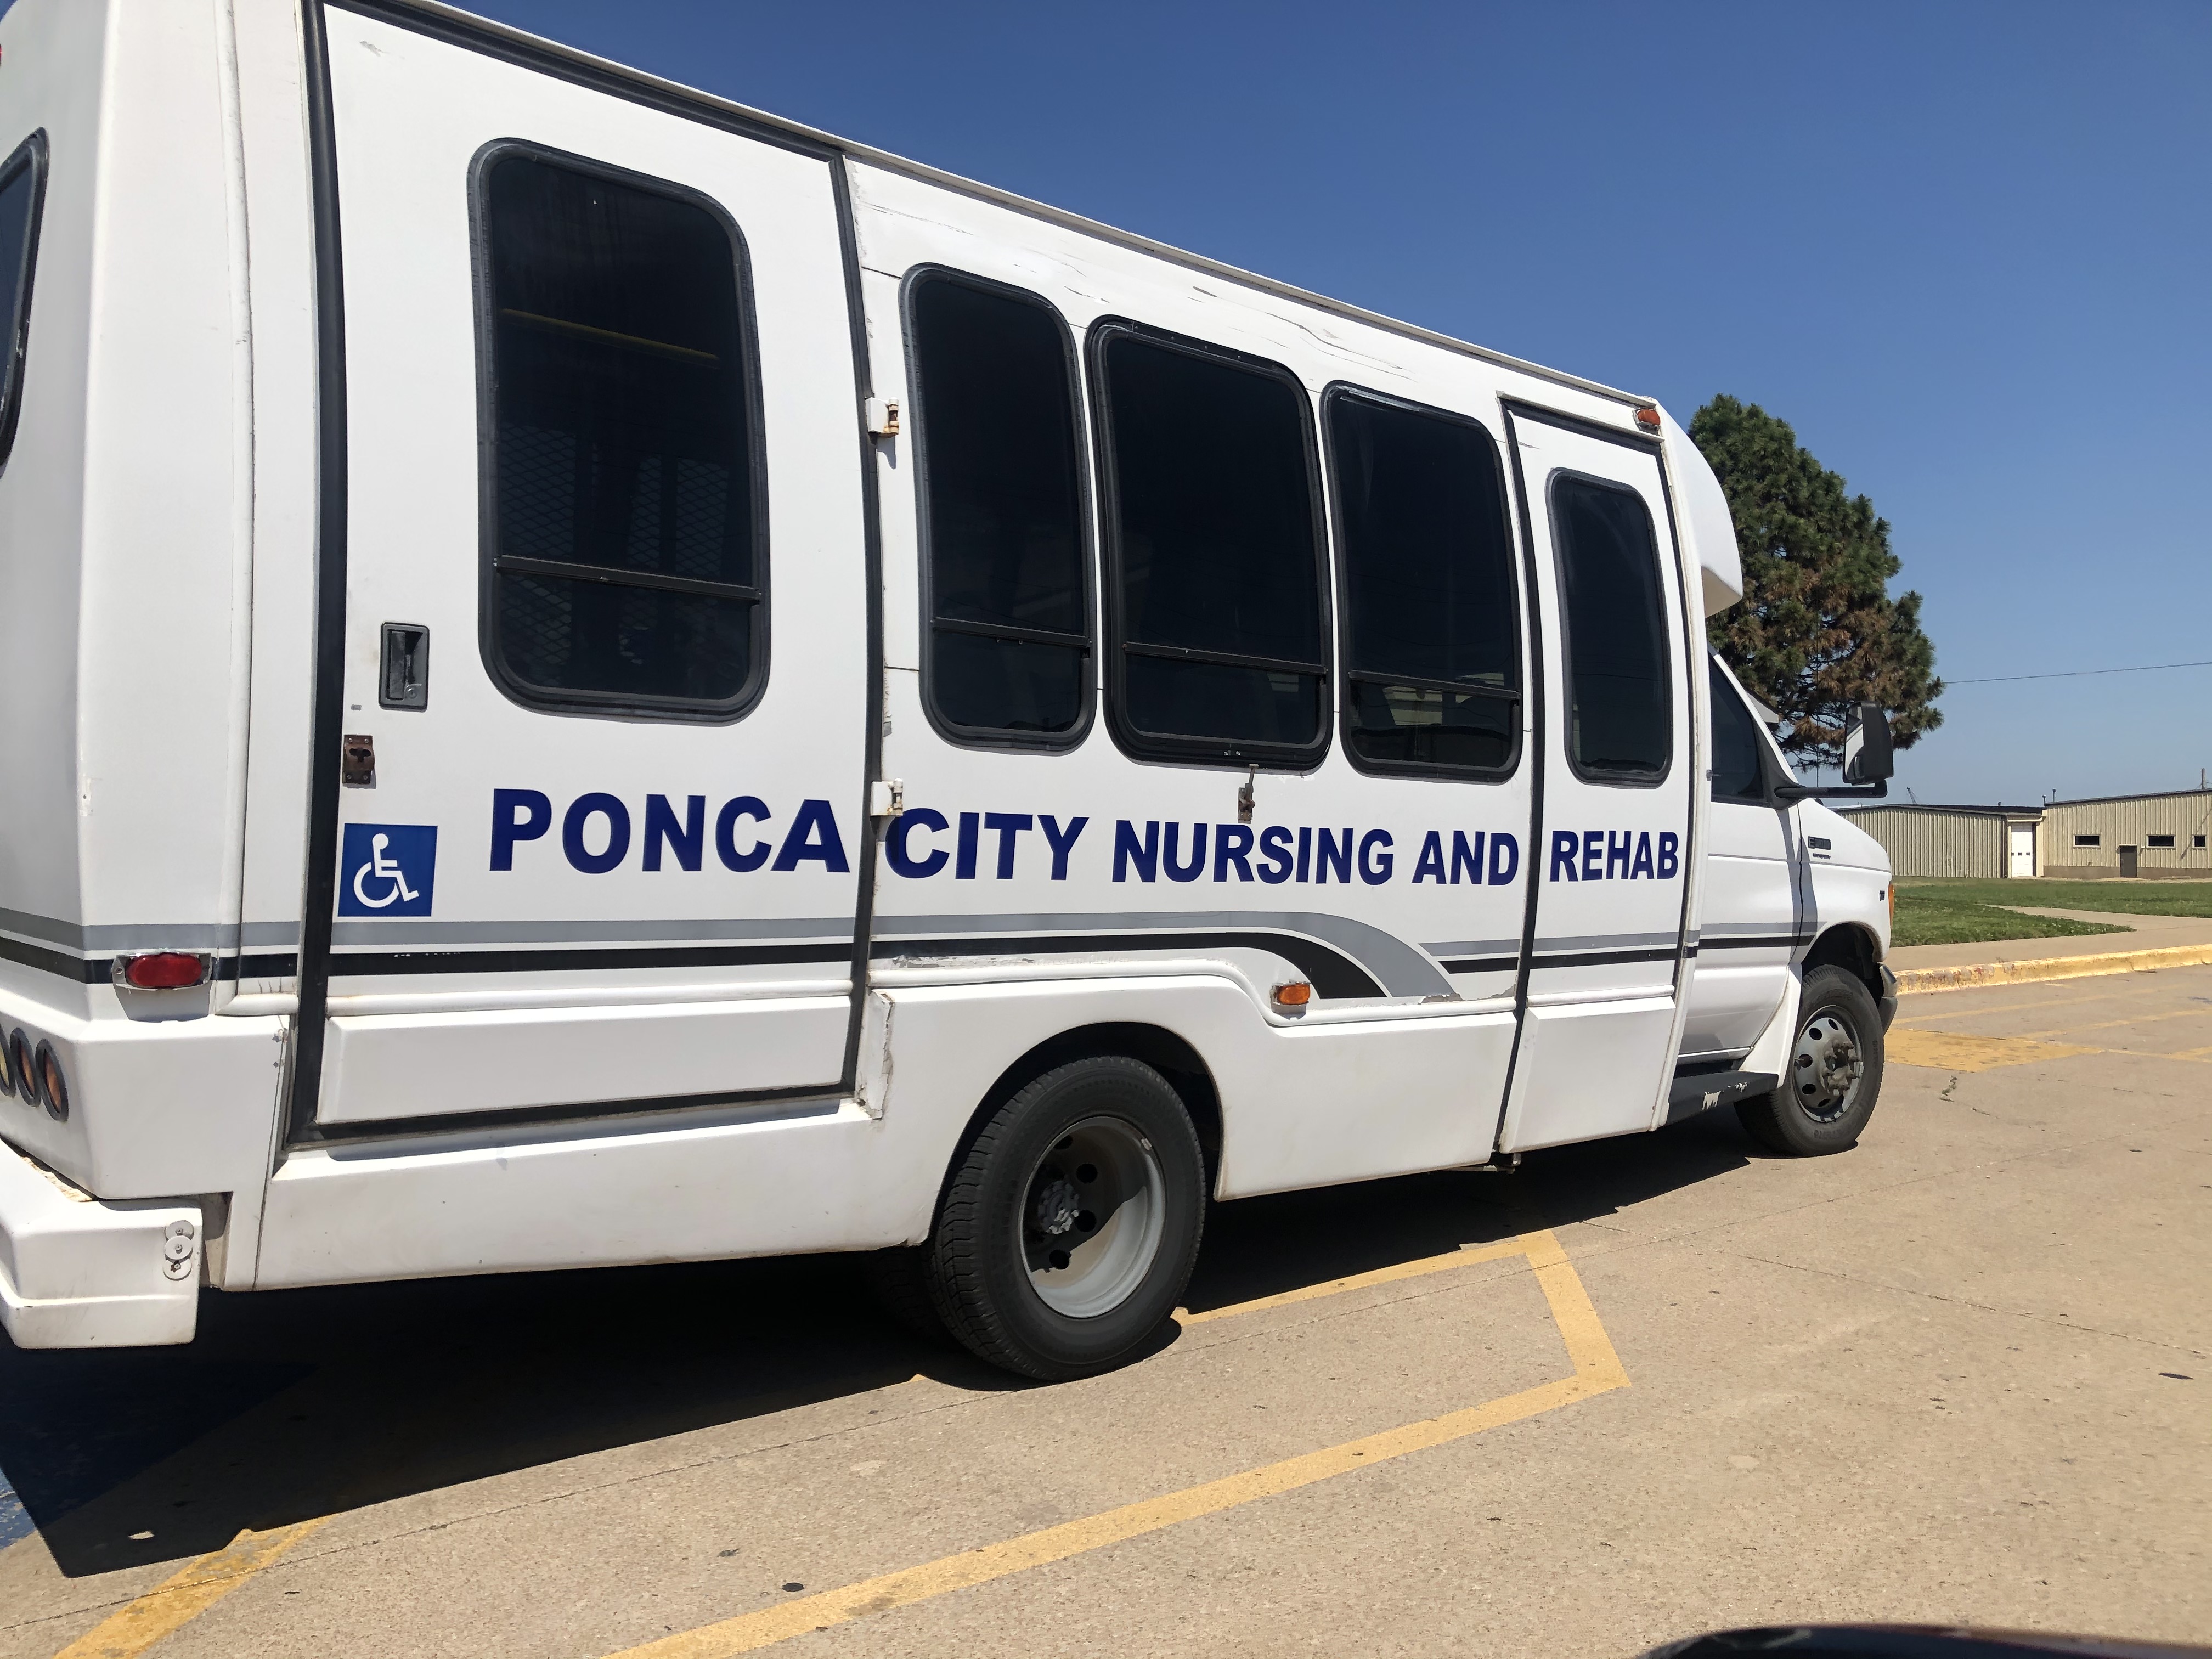 Ponca City Nursing and Rehab